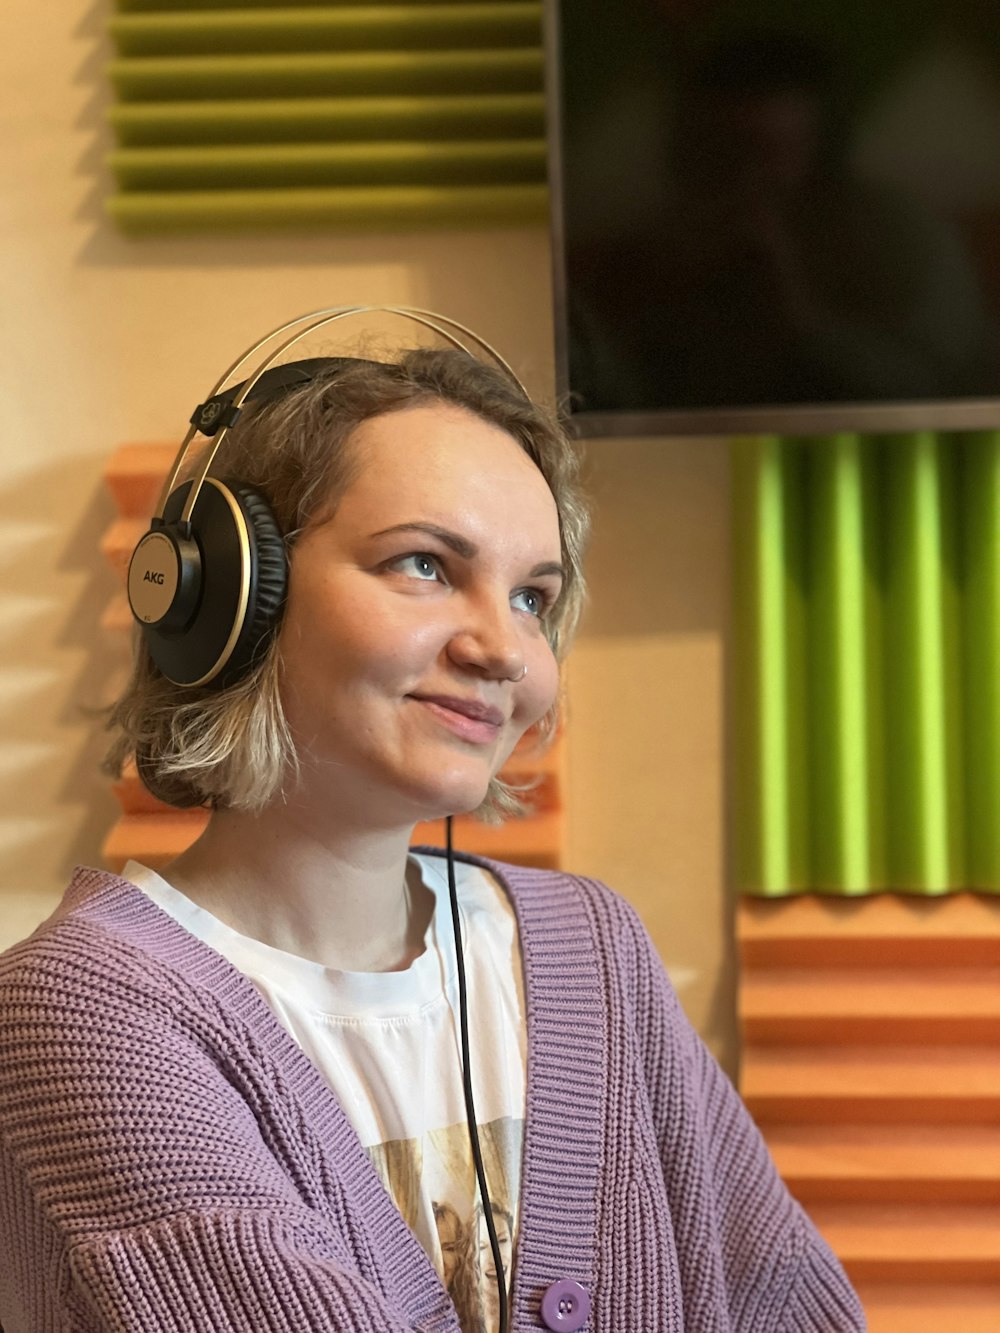 a woman wearing headphones